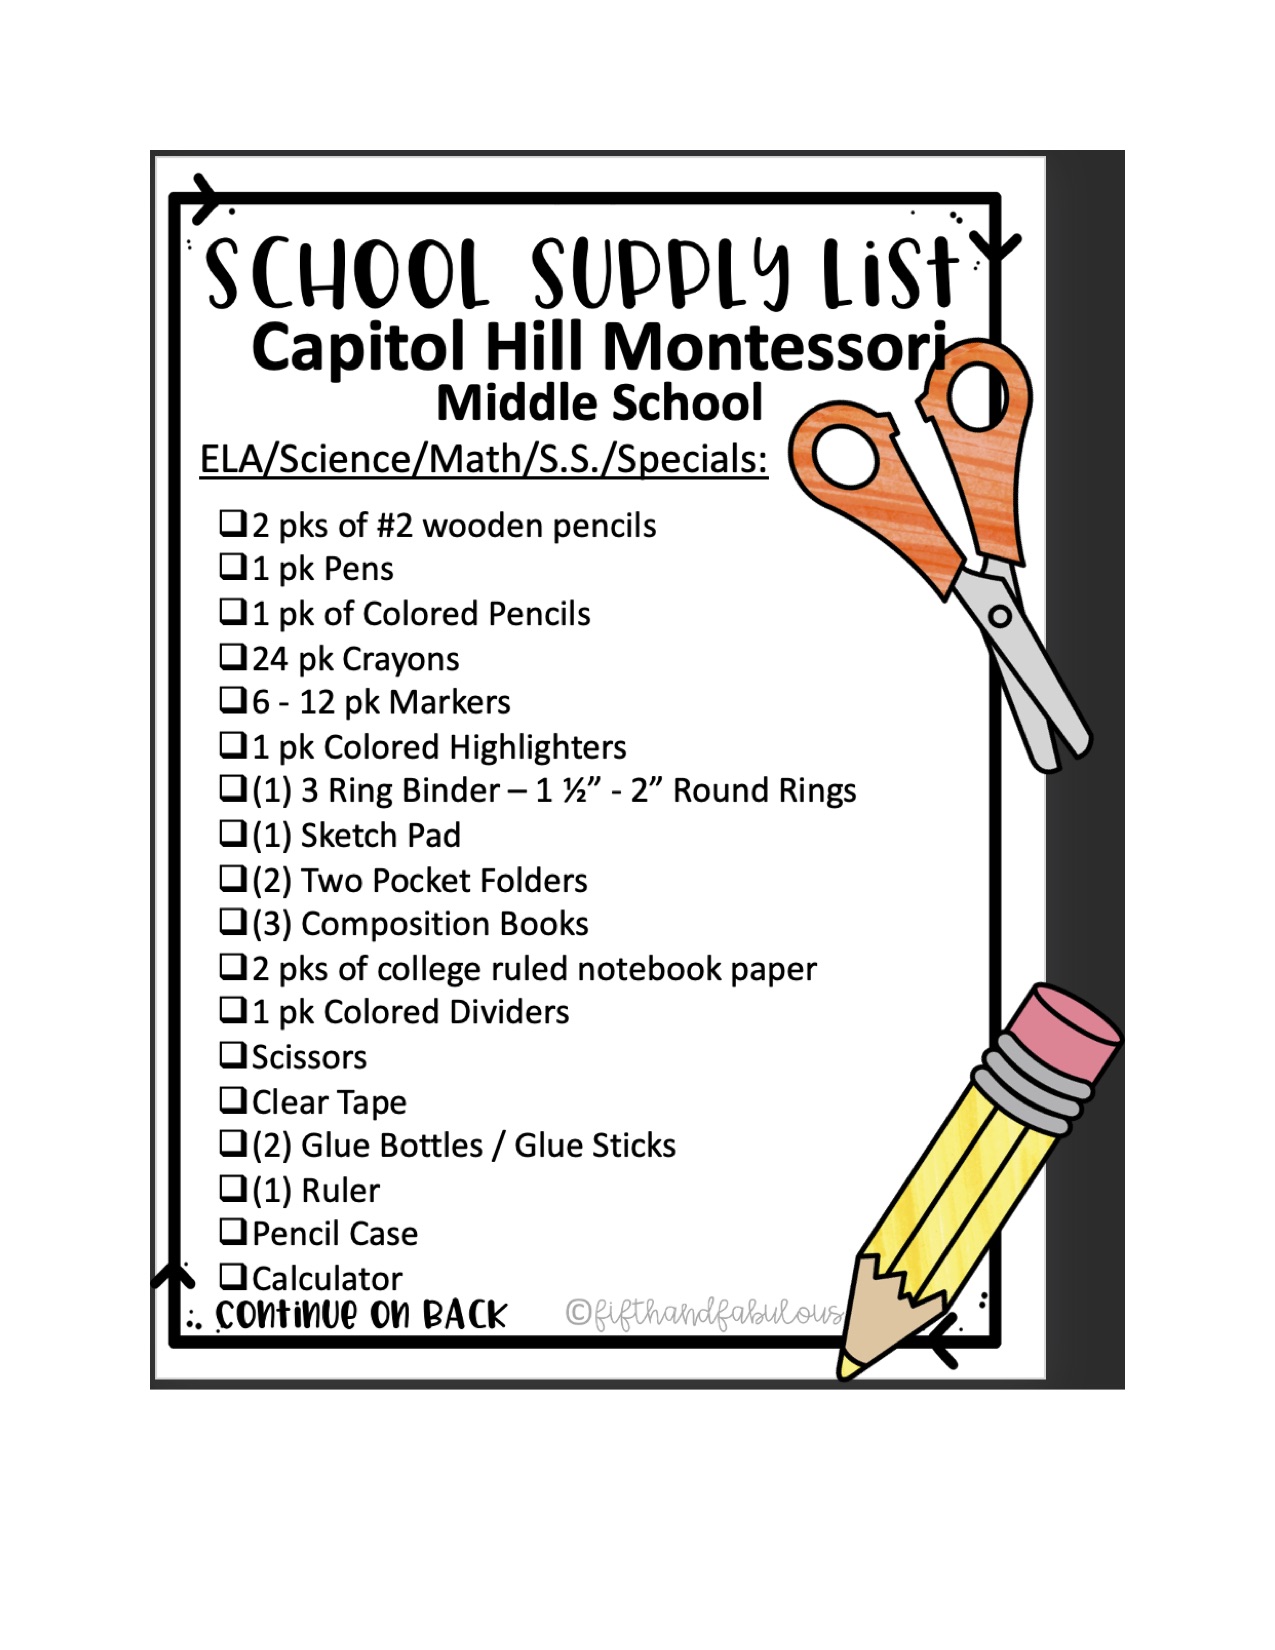 Middle School Supplies List